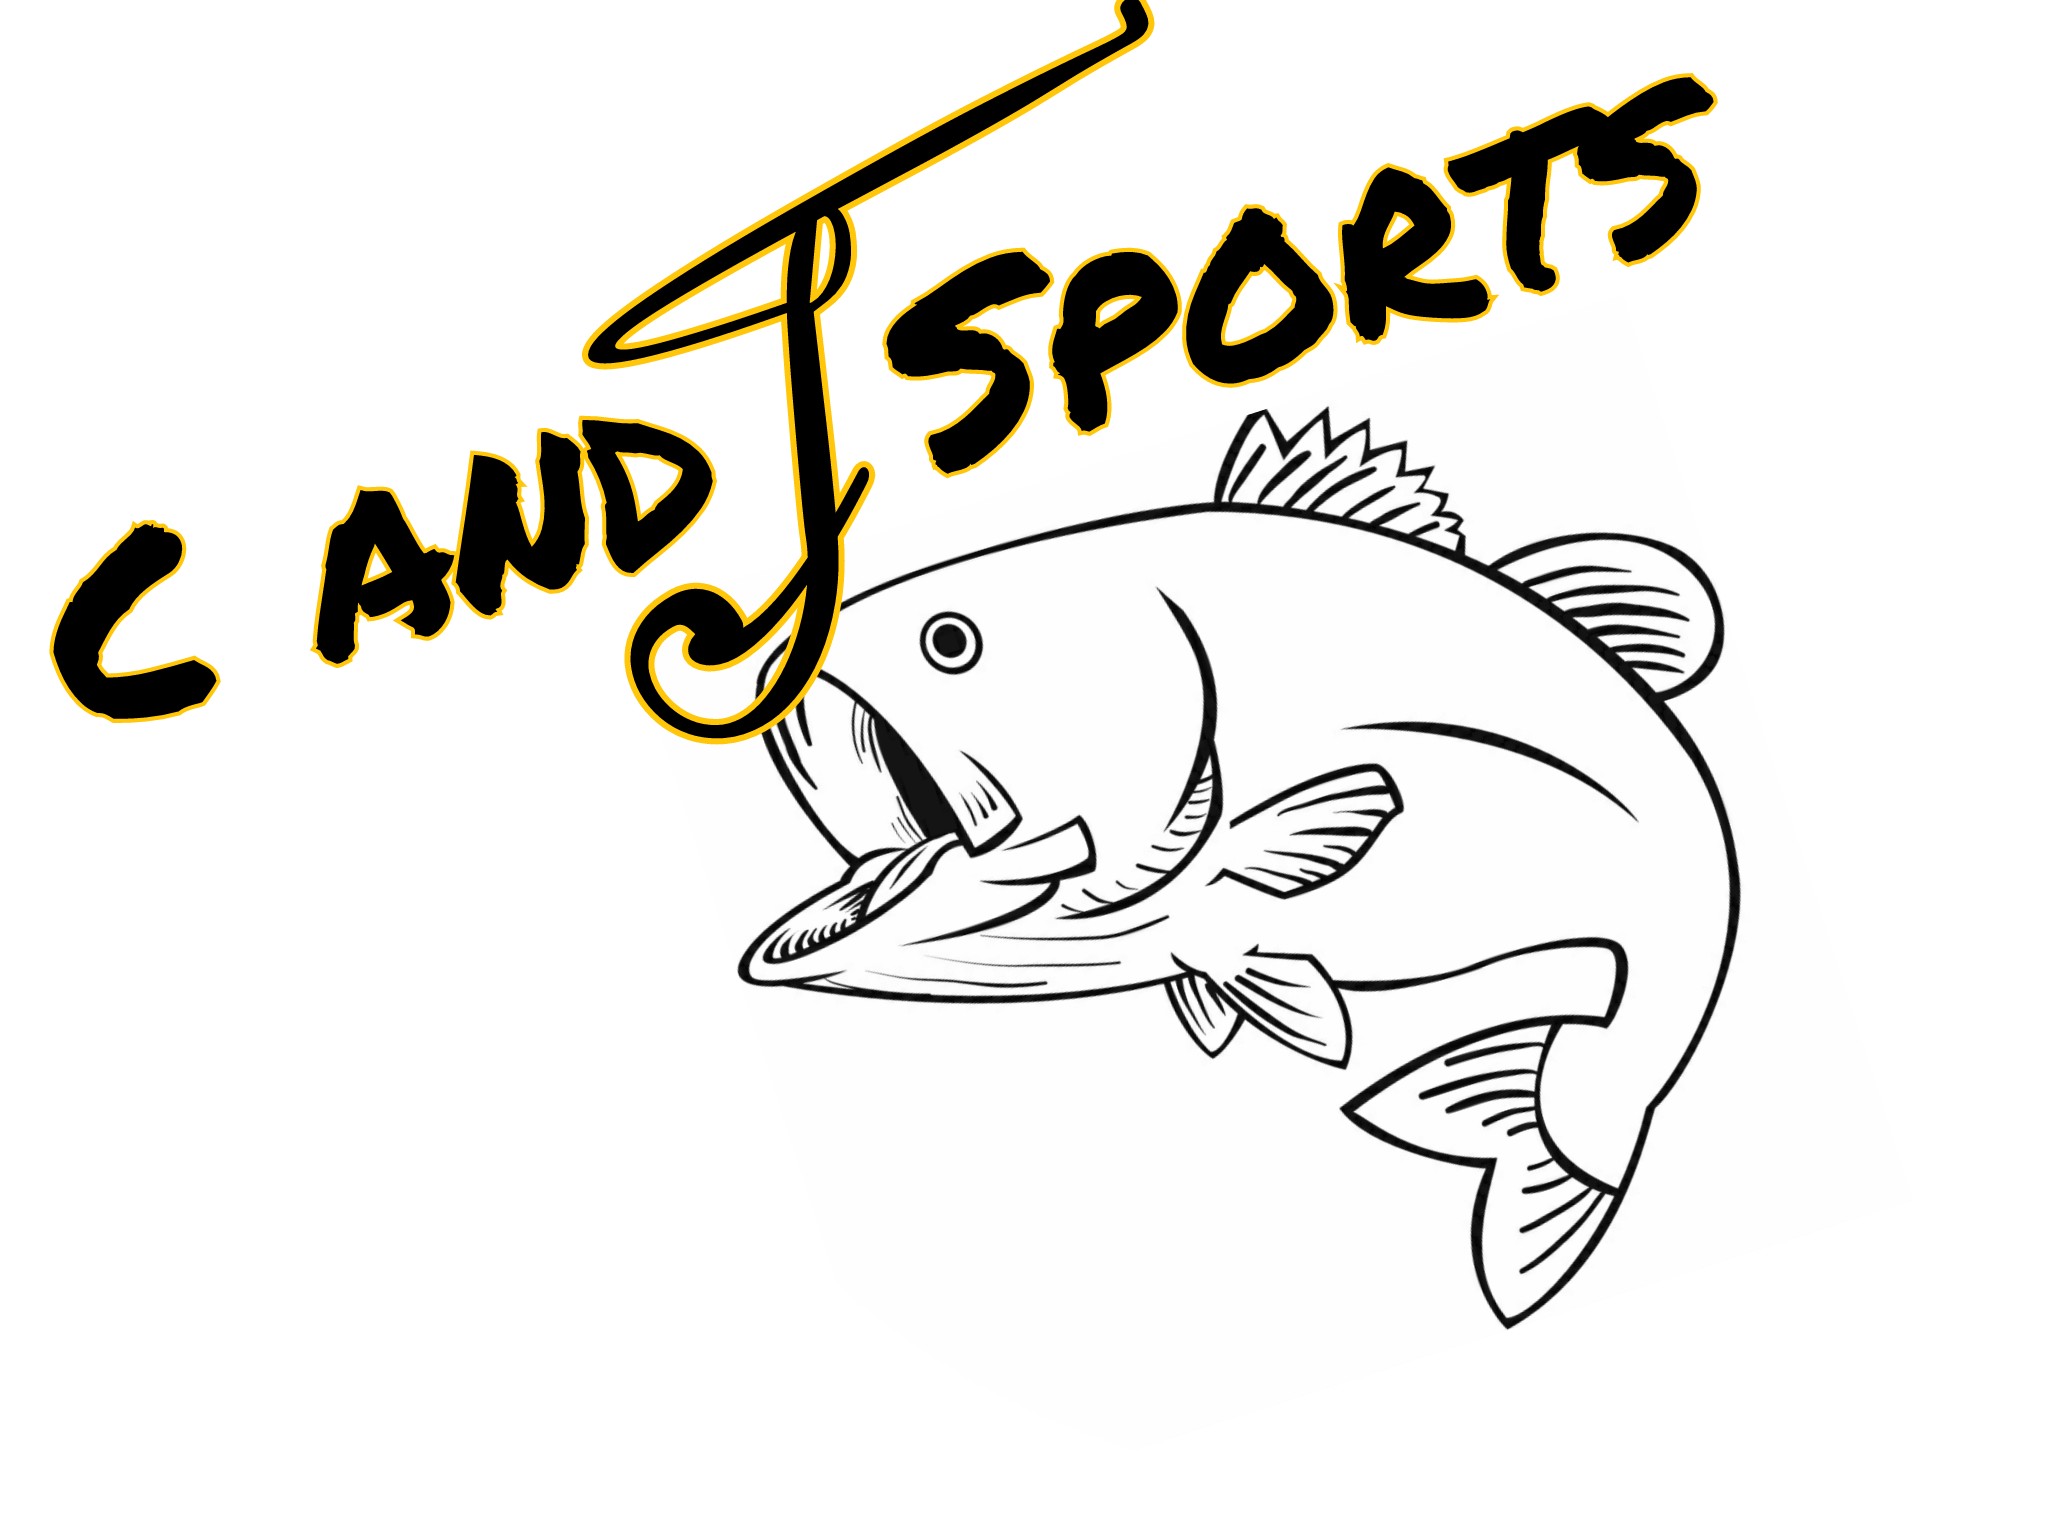 C & J Sports Inc